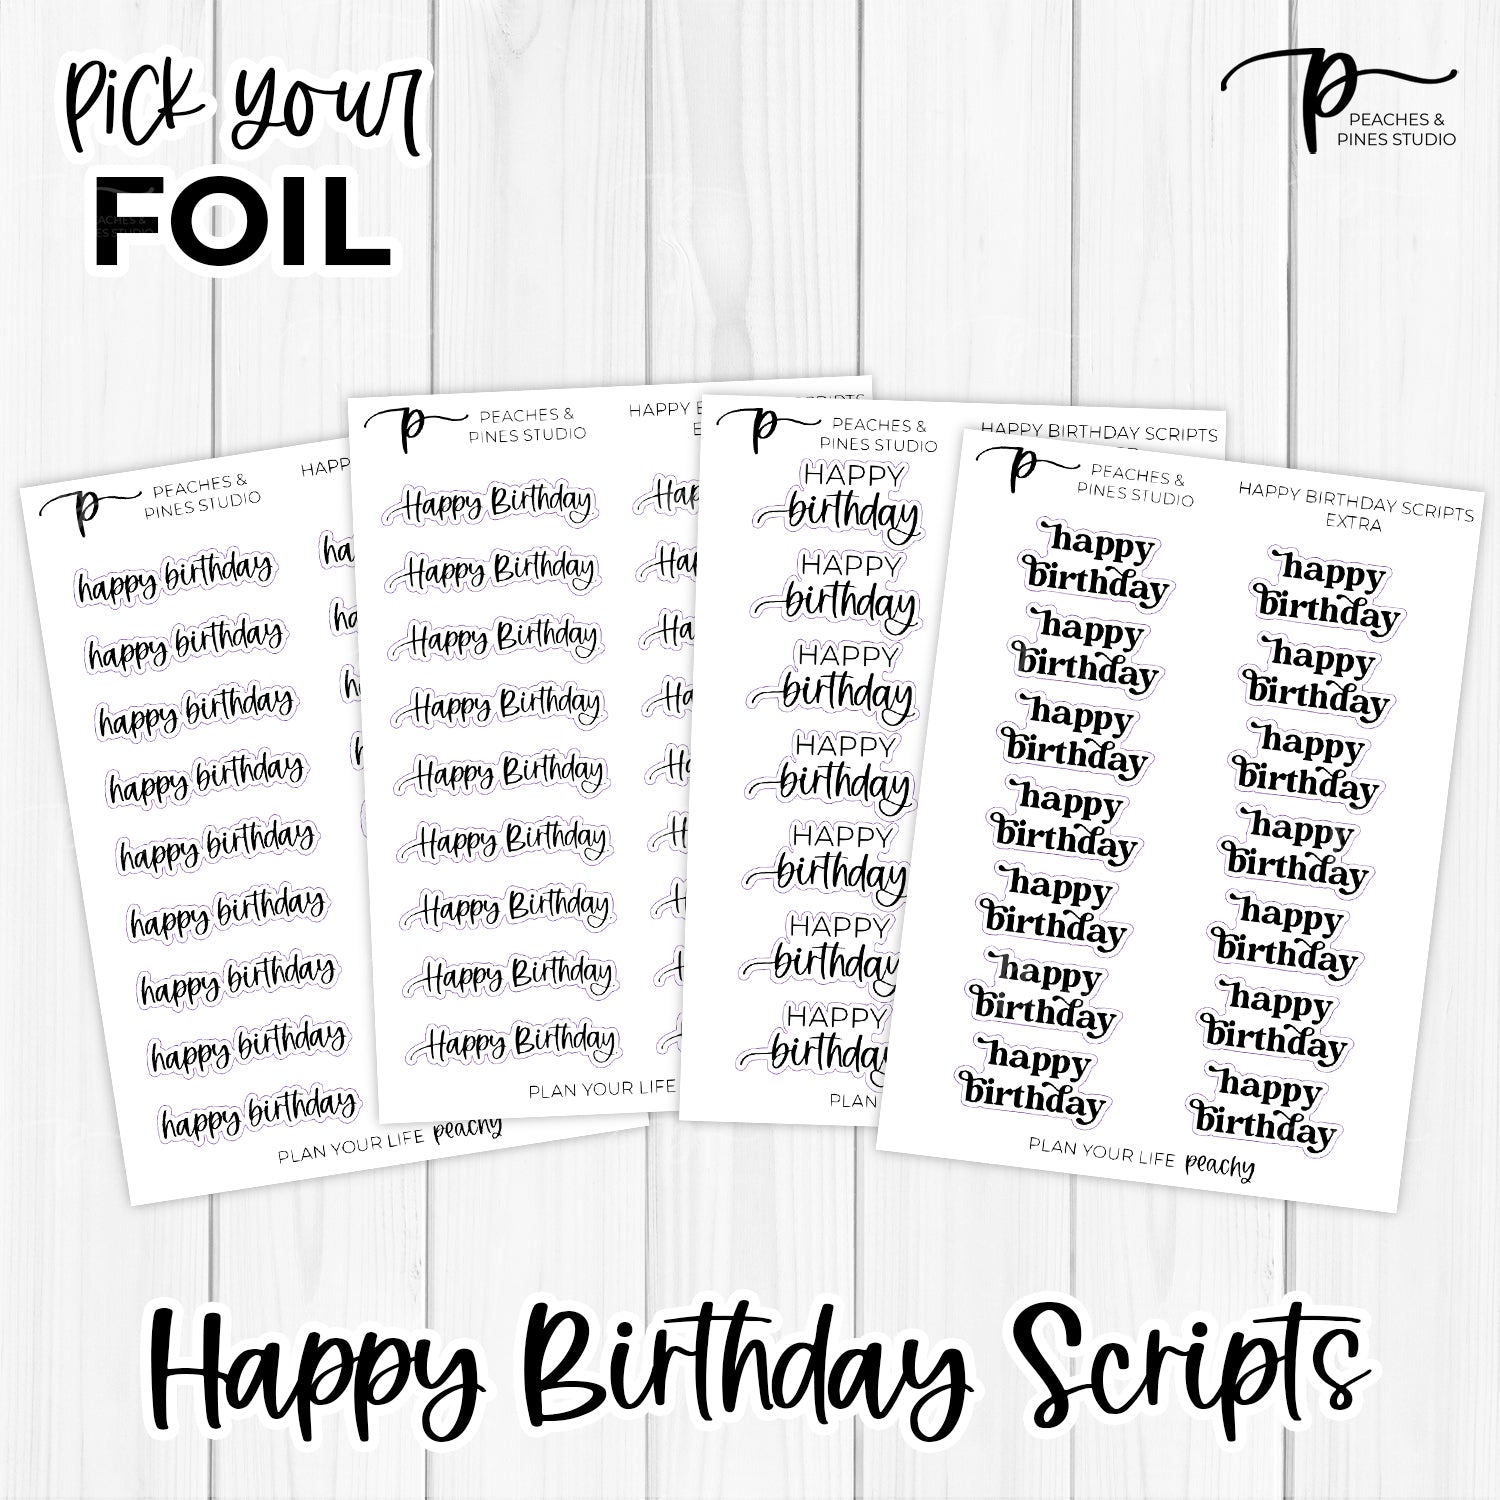 Happy Birthday - Foiled Scripts